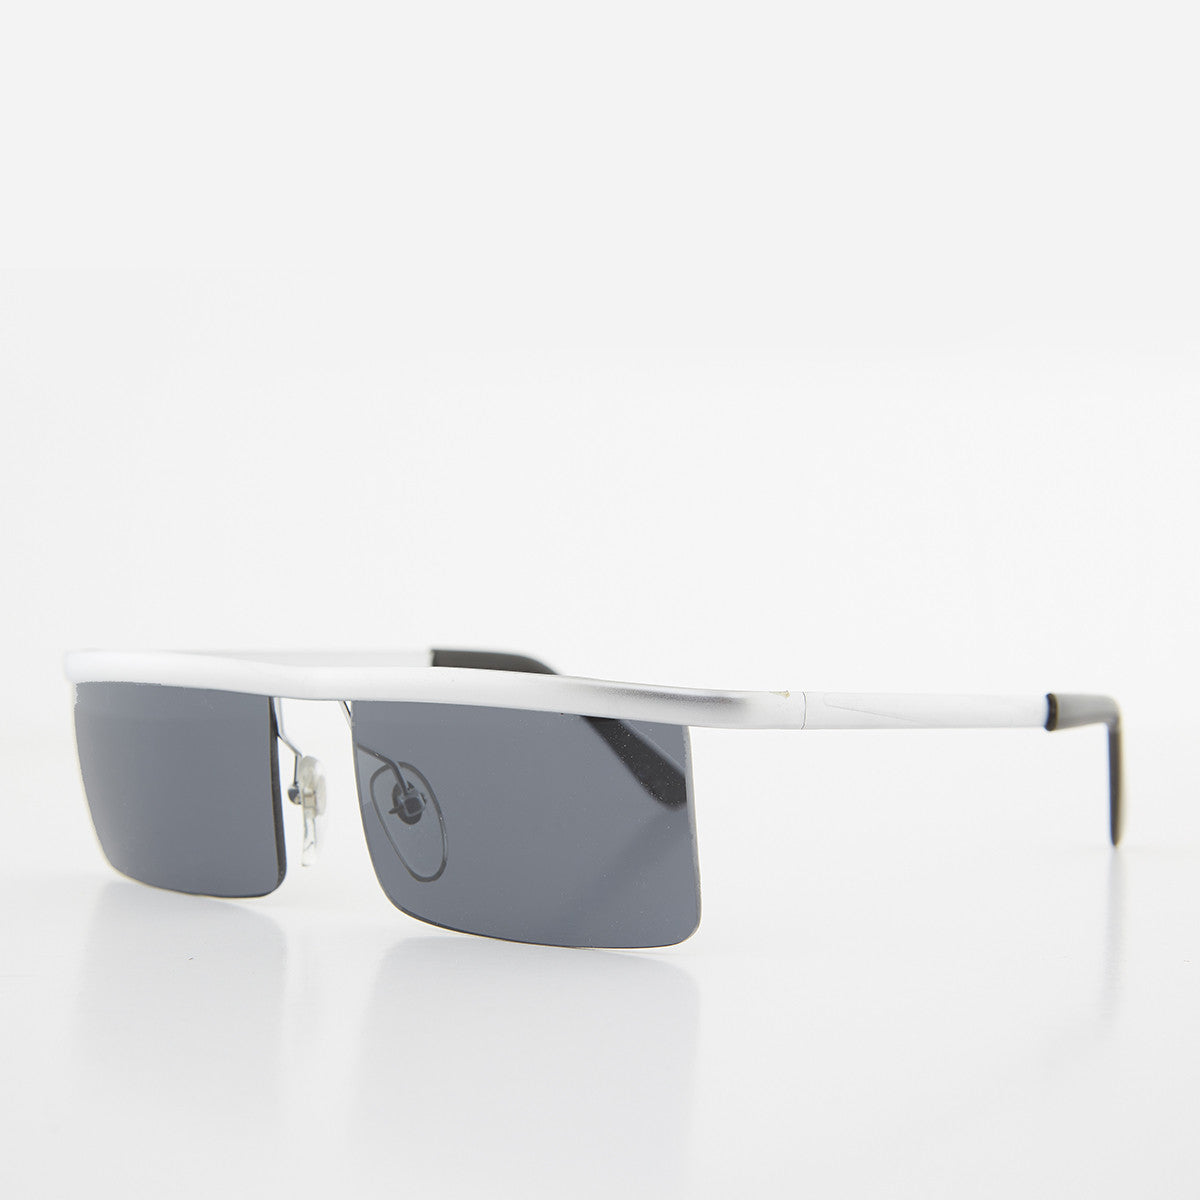 Rimless futuristic steampunk silver metal vintage sunglasses